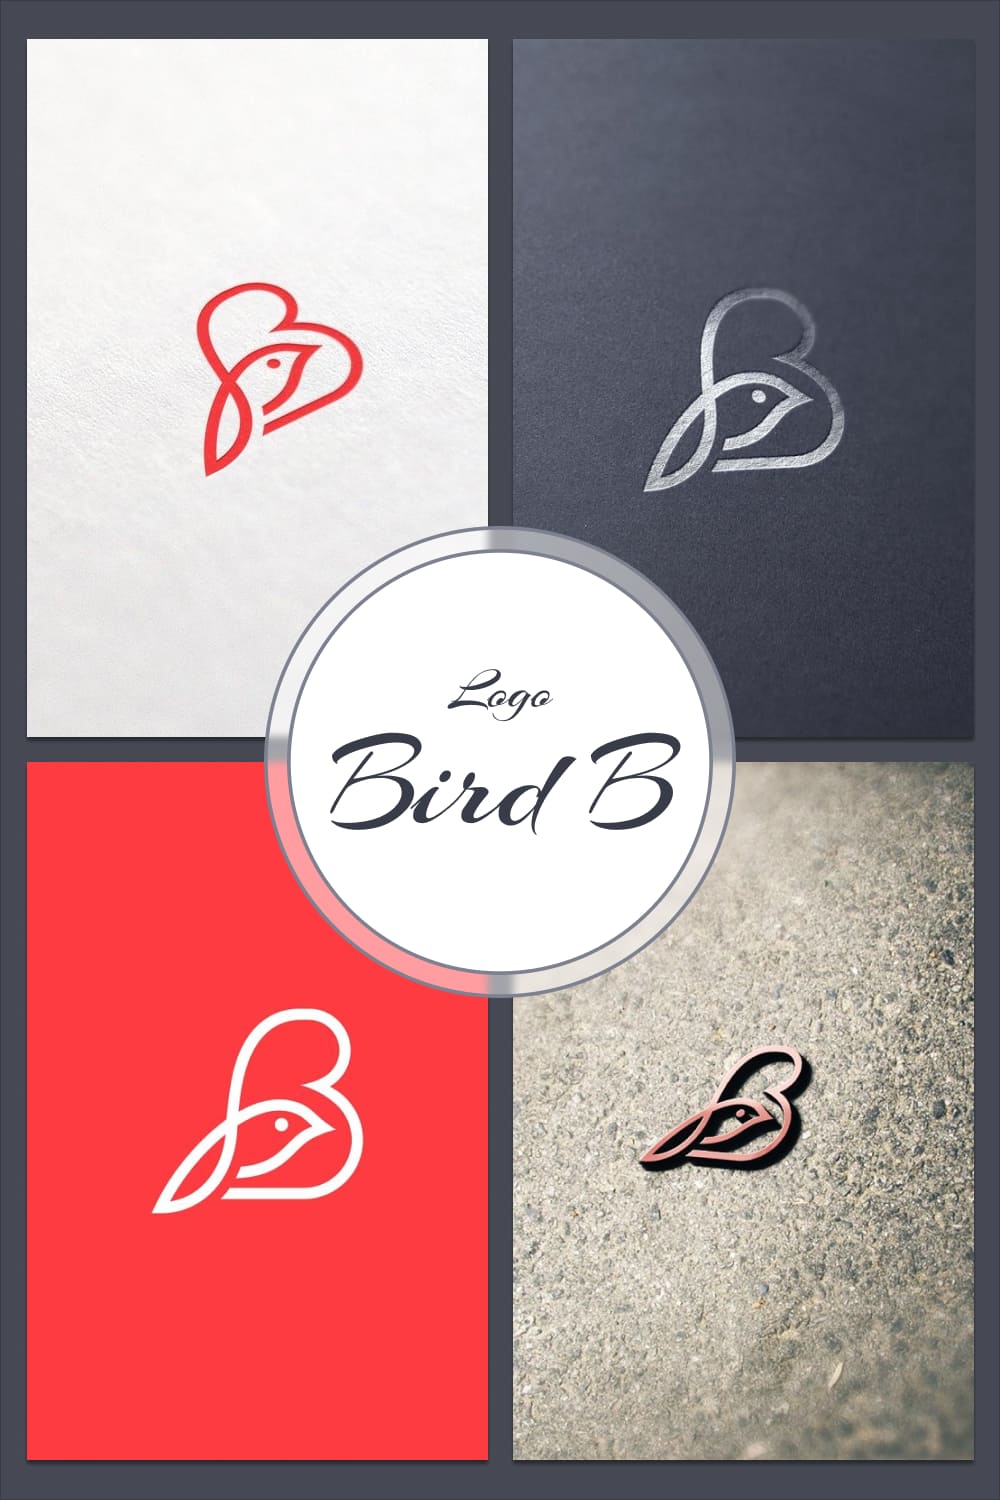 bird b logo design.